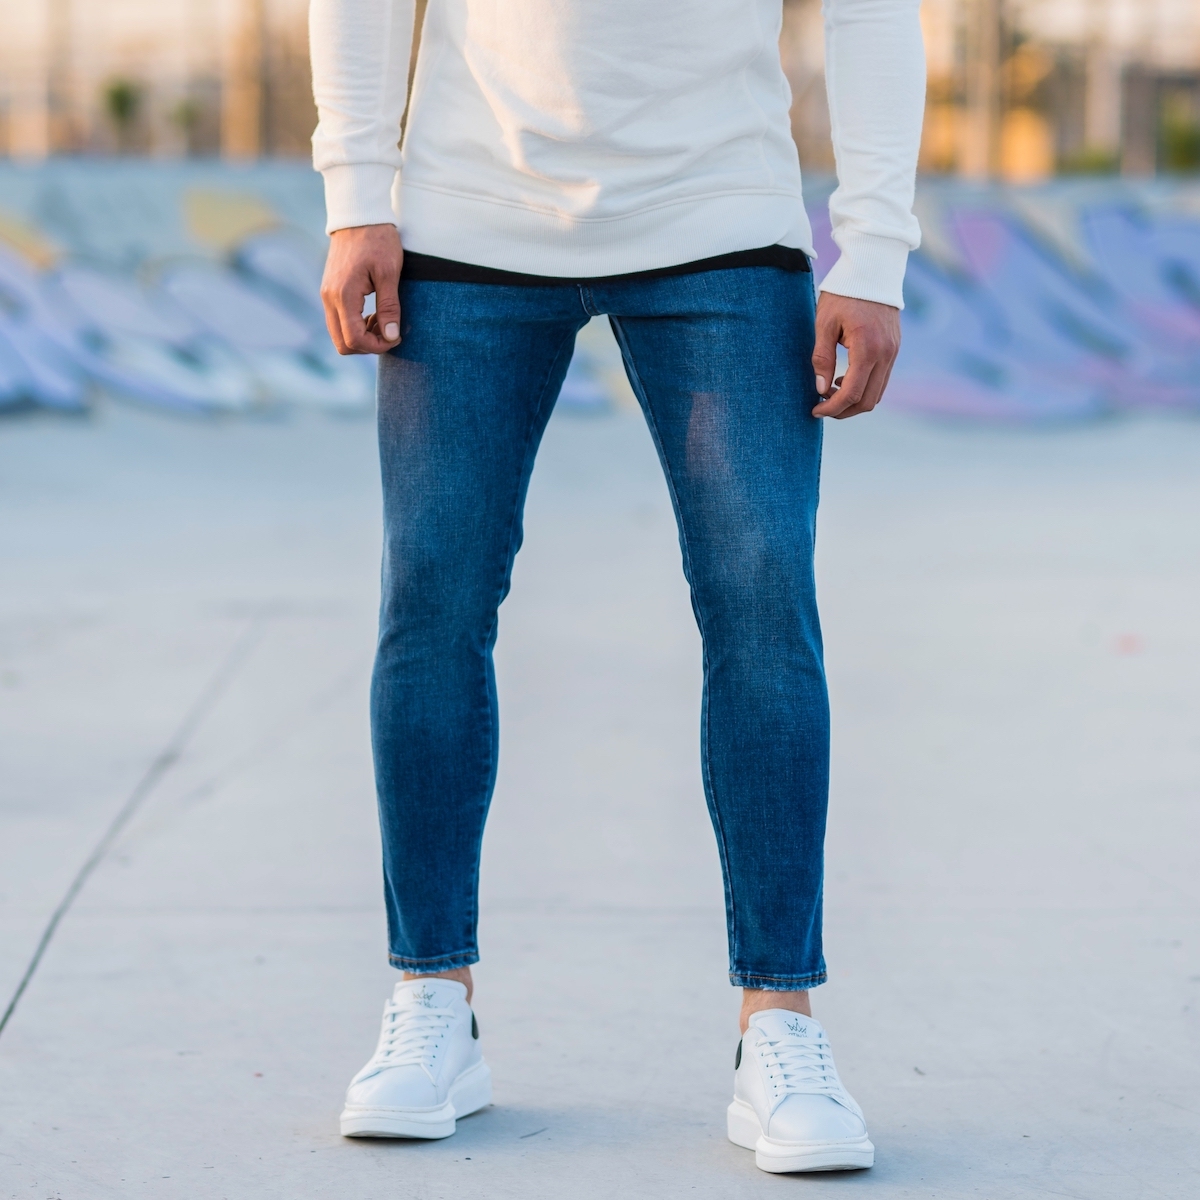 denim skinny jeans for guys